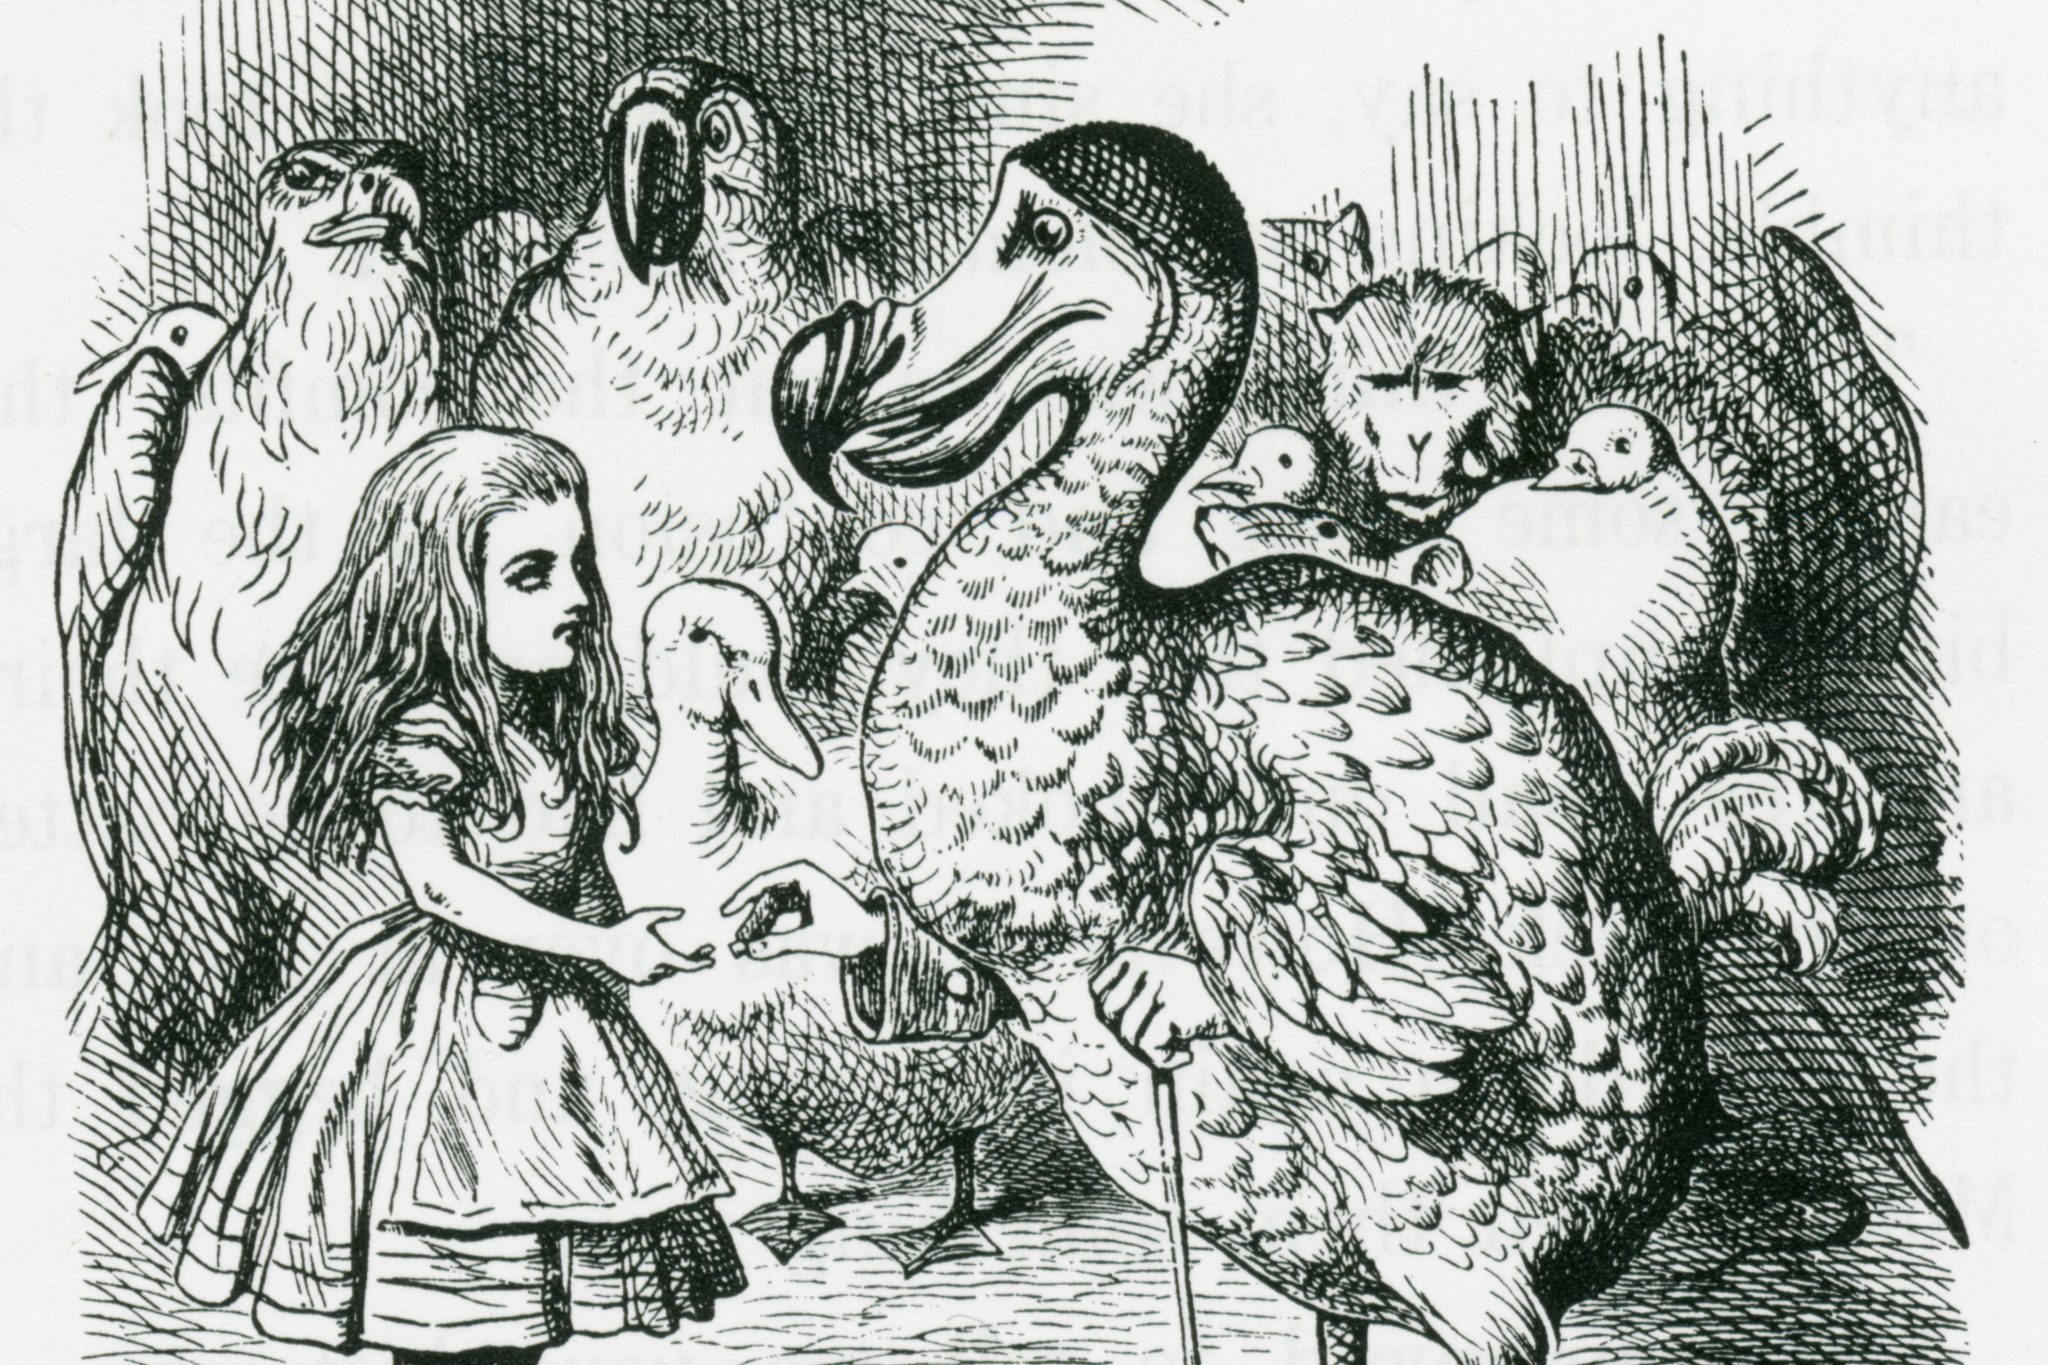 Alice and the Dodo meet in Wonderland. Illustration by John Tenniel